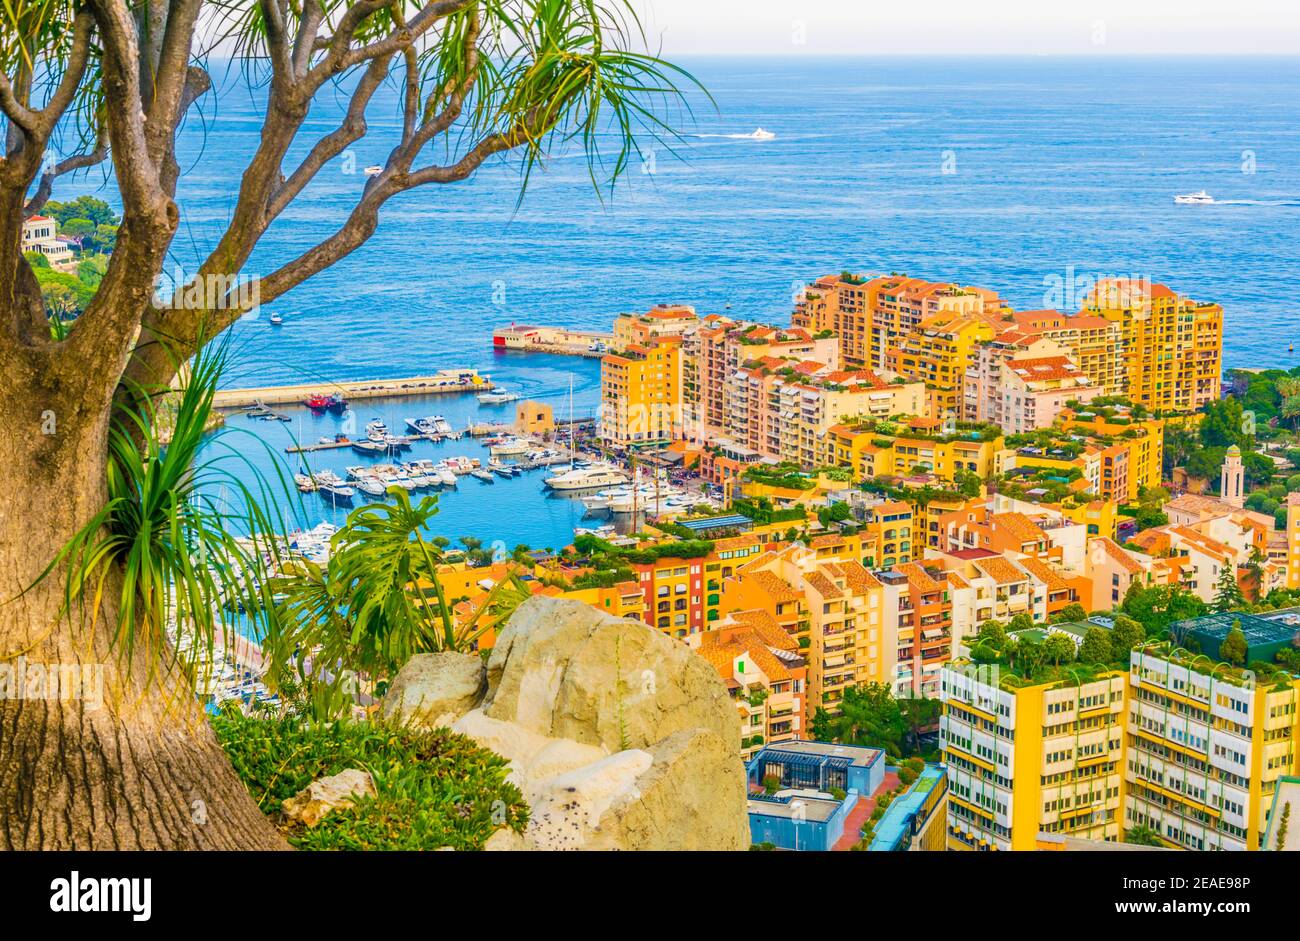 Port de Fontvieille in Monaco viewed from jardin exotique botanical garden  Stock Photo - Alamy